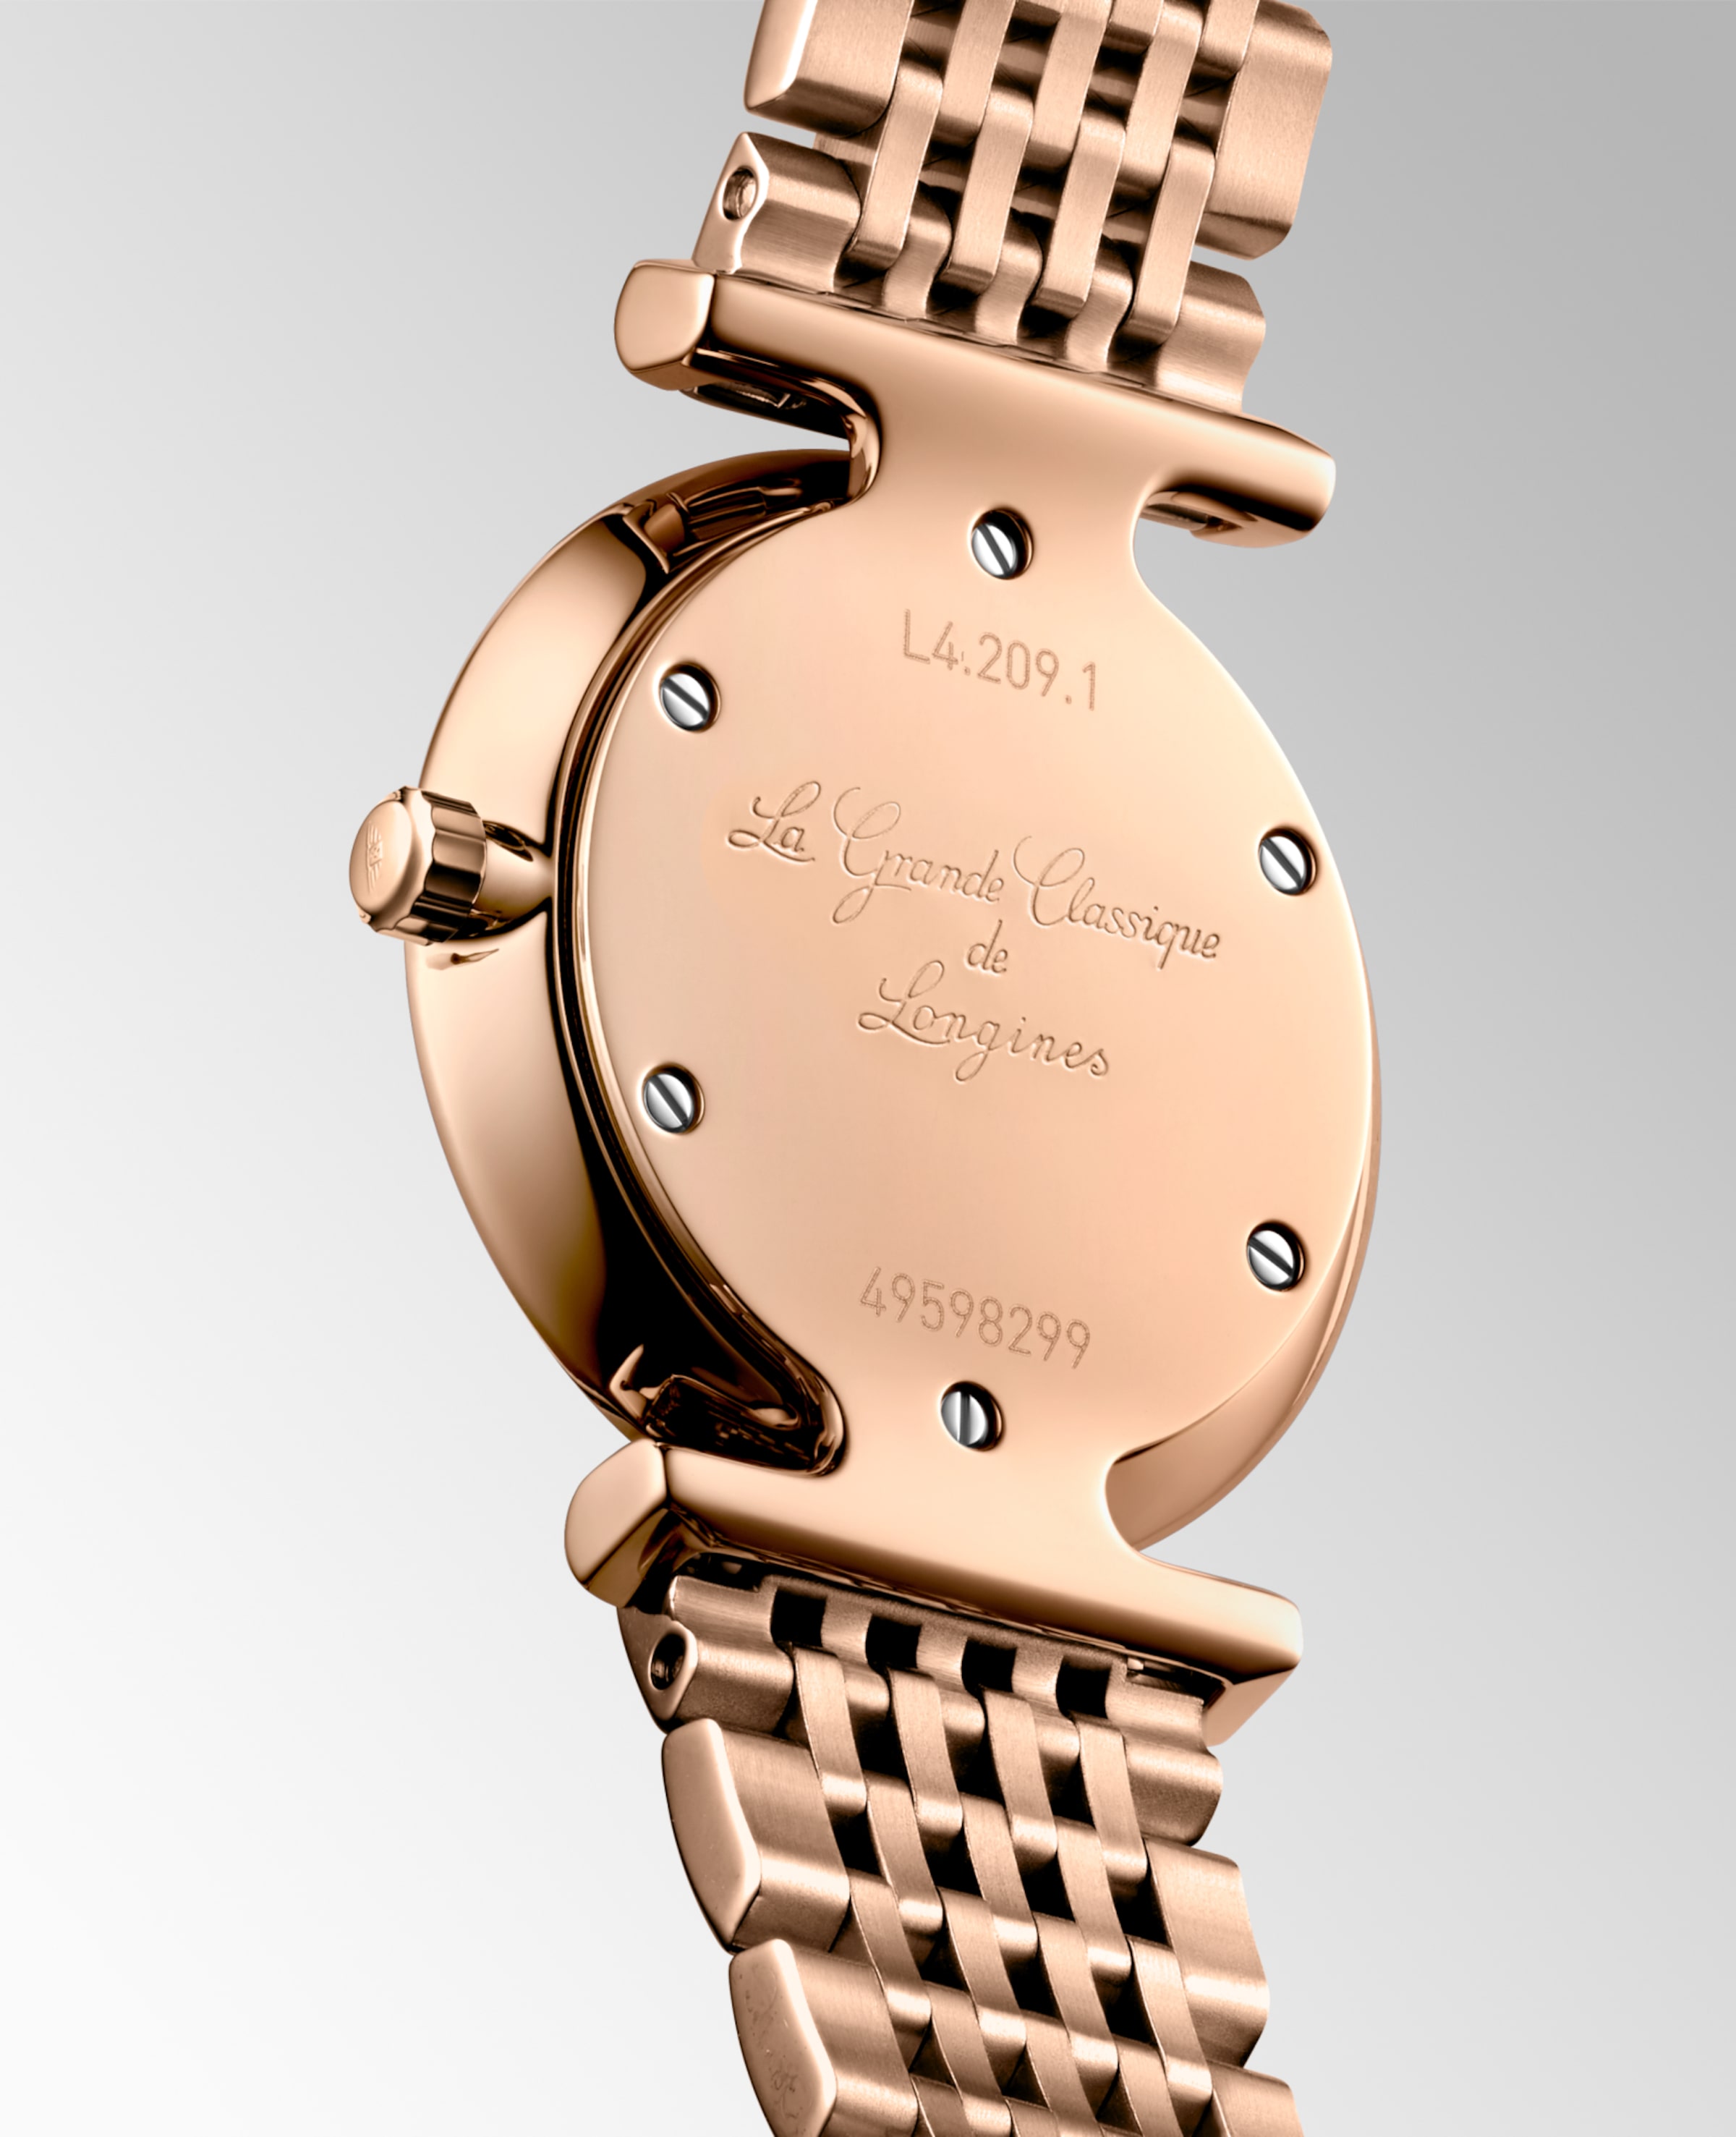 Longines LA GRANDE CLASSIQUE DE LONGINES Quartz Red PVD coating Watch - L4.209.1.97.8